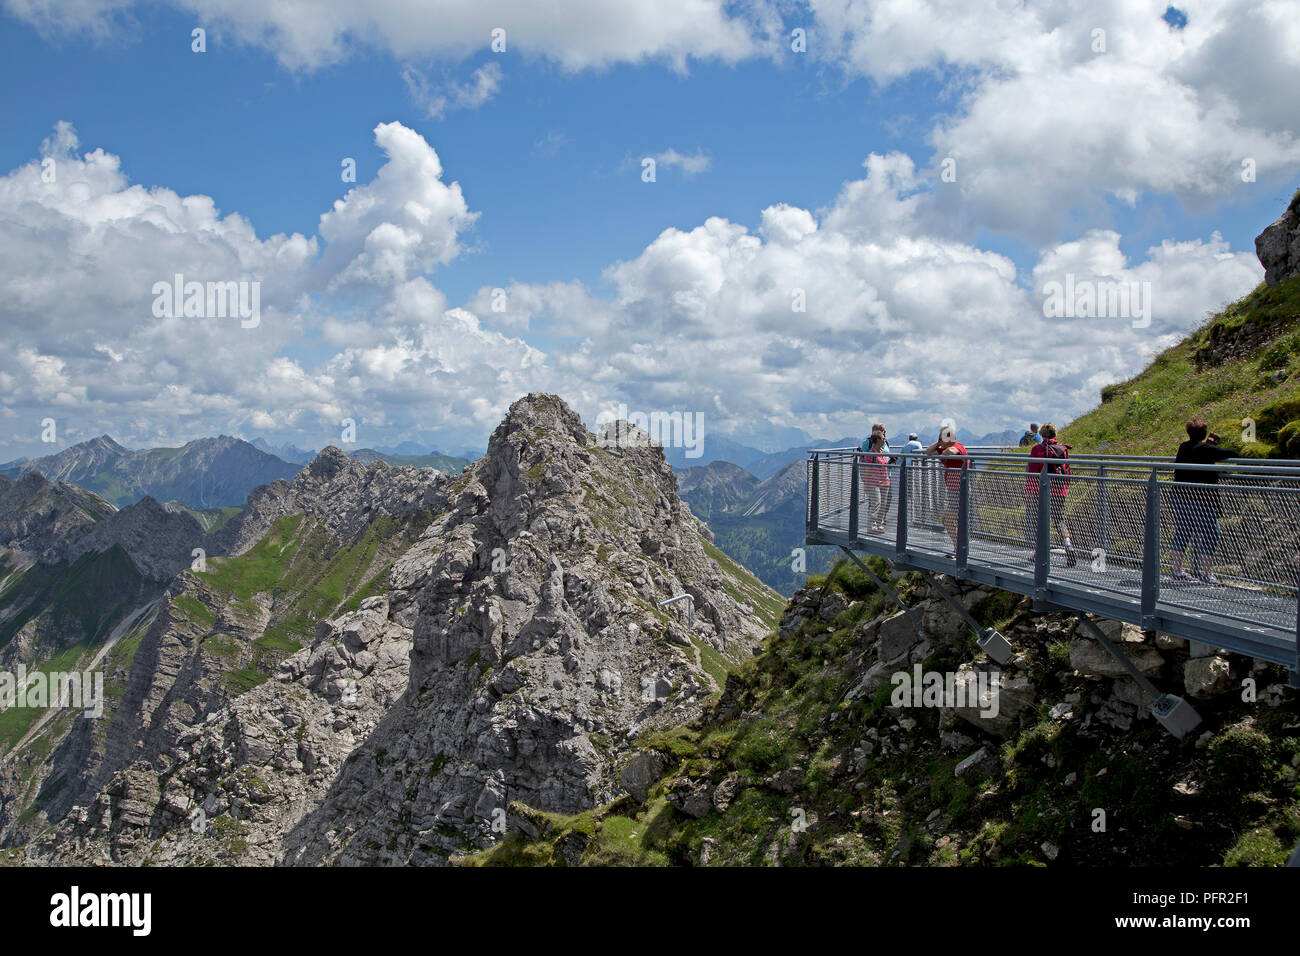 https://c8.alamy.com/comp/PFR2F1/nordwandsteig-nebelhorn-summit-oberstdorf-allgaeu-bavaria-germany-PFR2F1.jpg